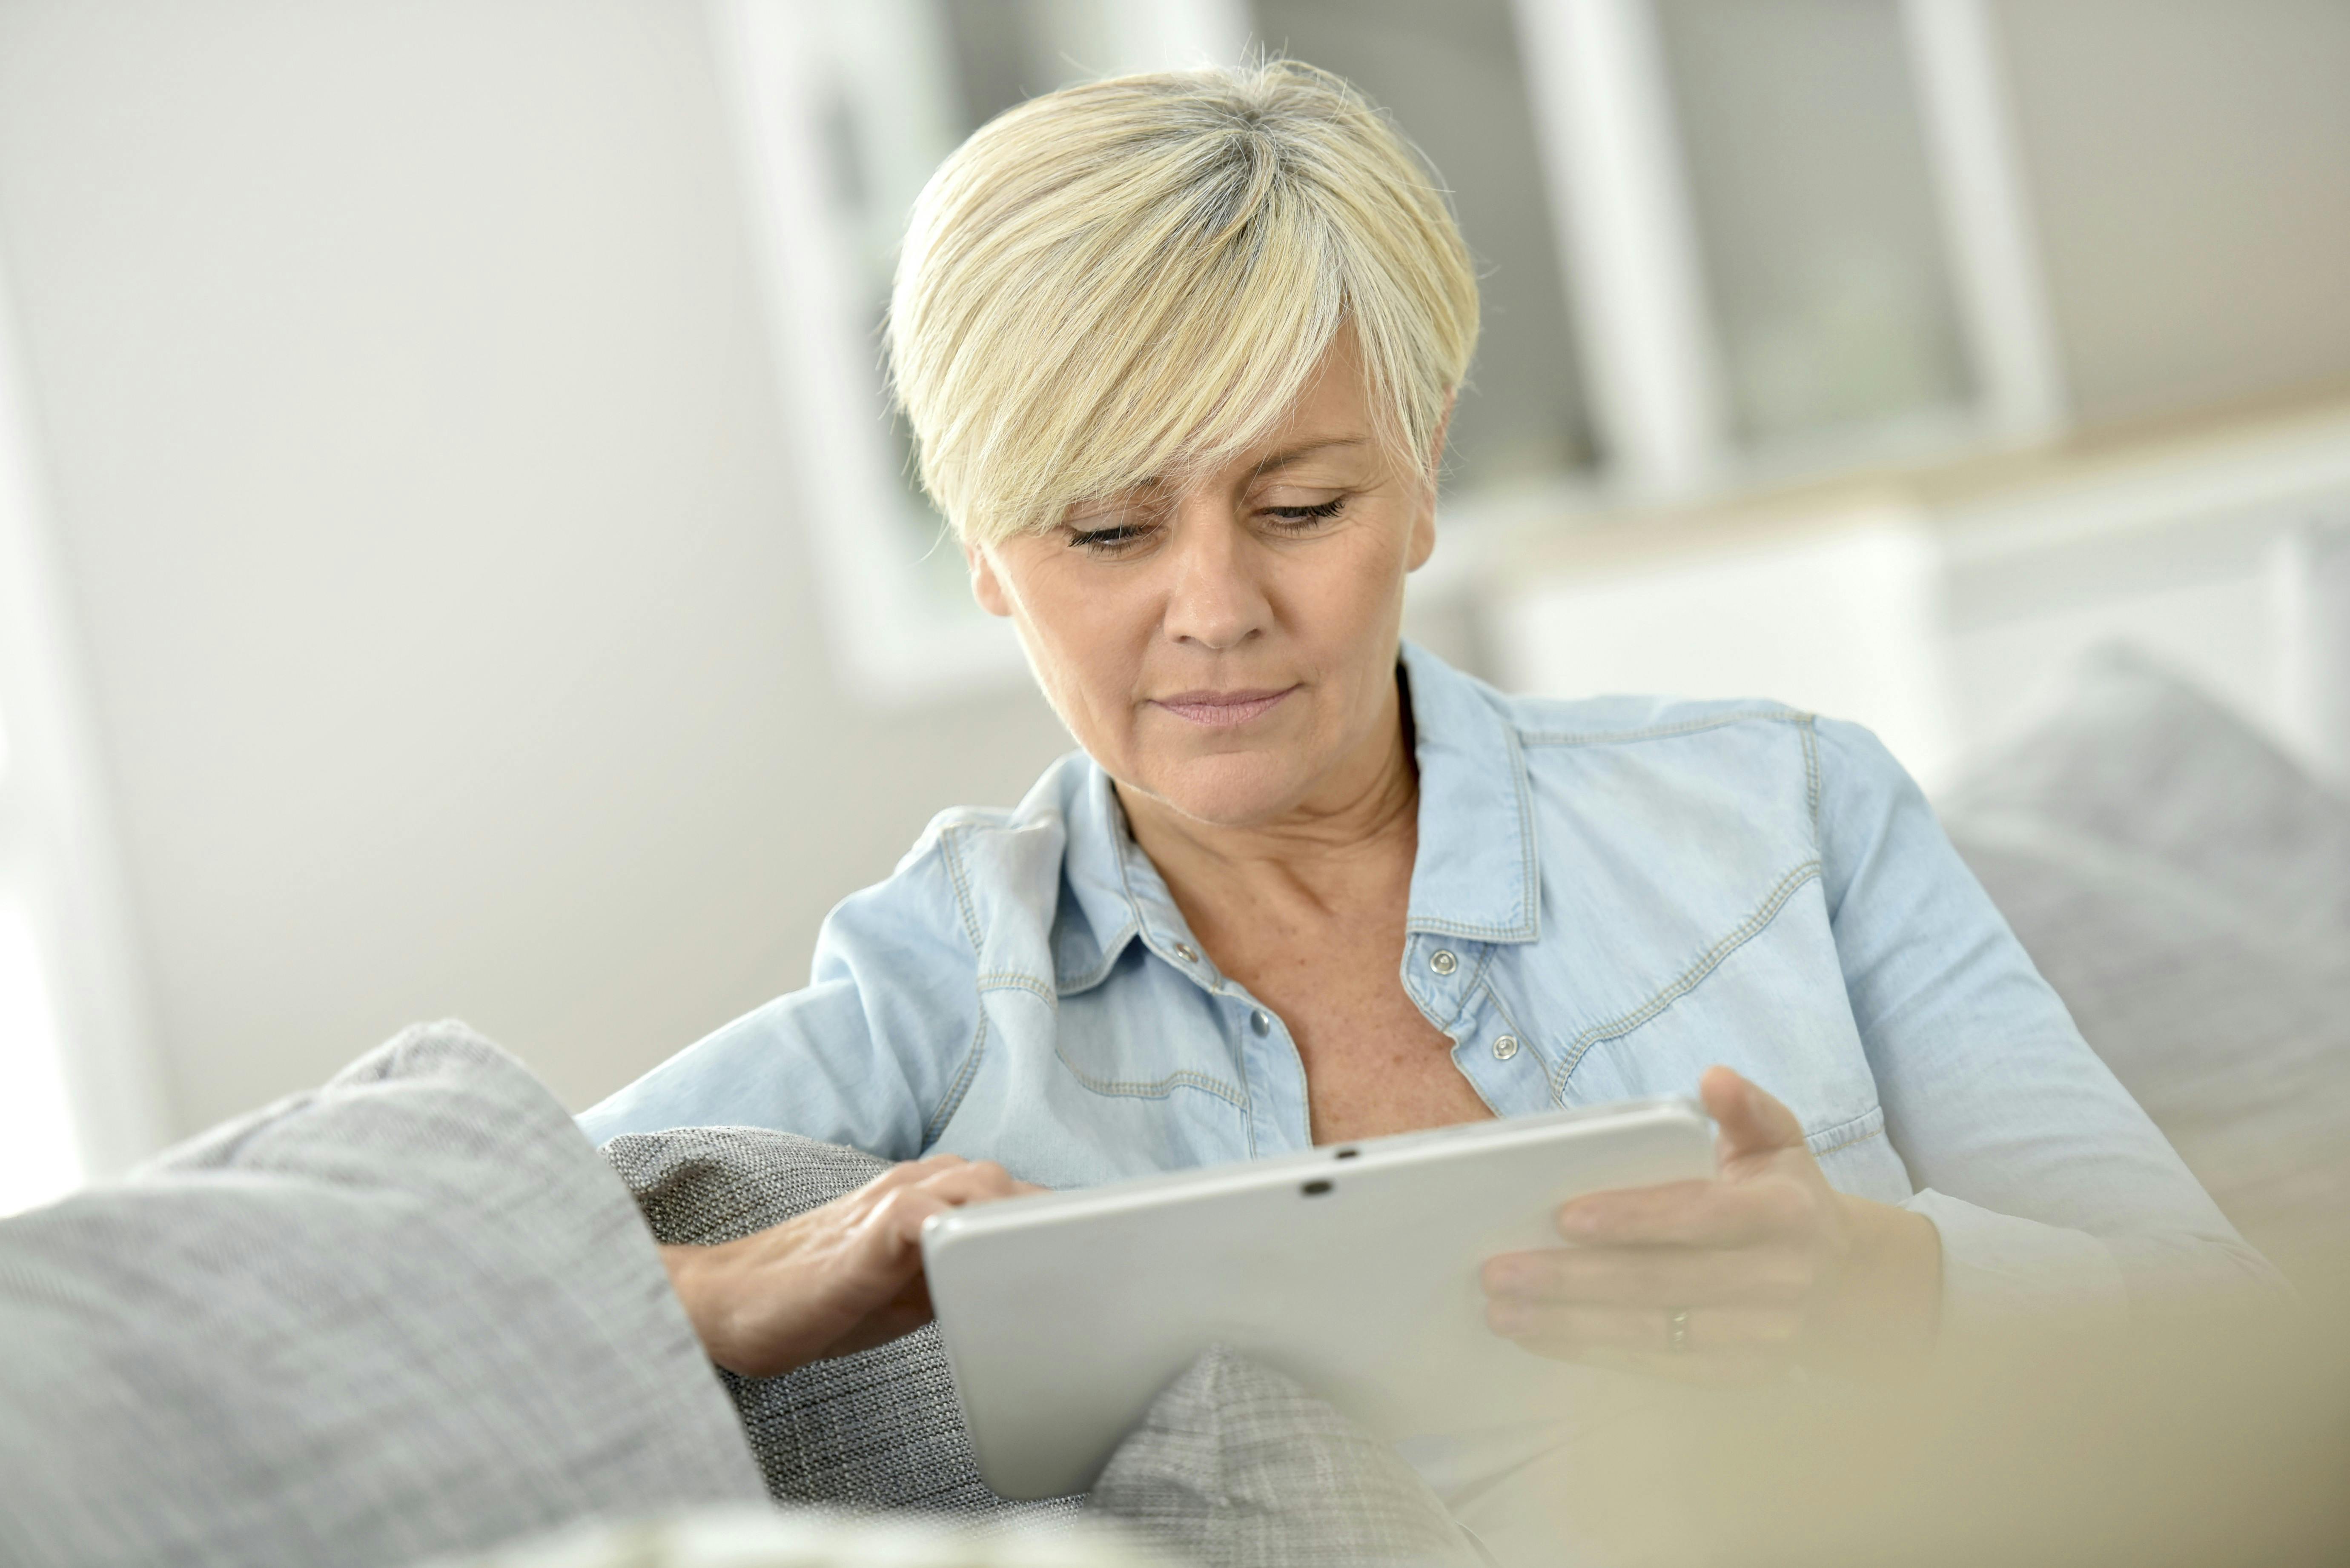 Senior woman websurfing on digital tablet